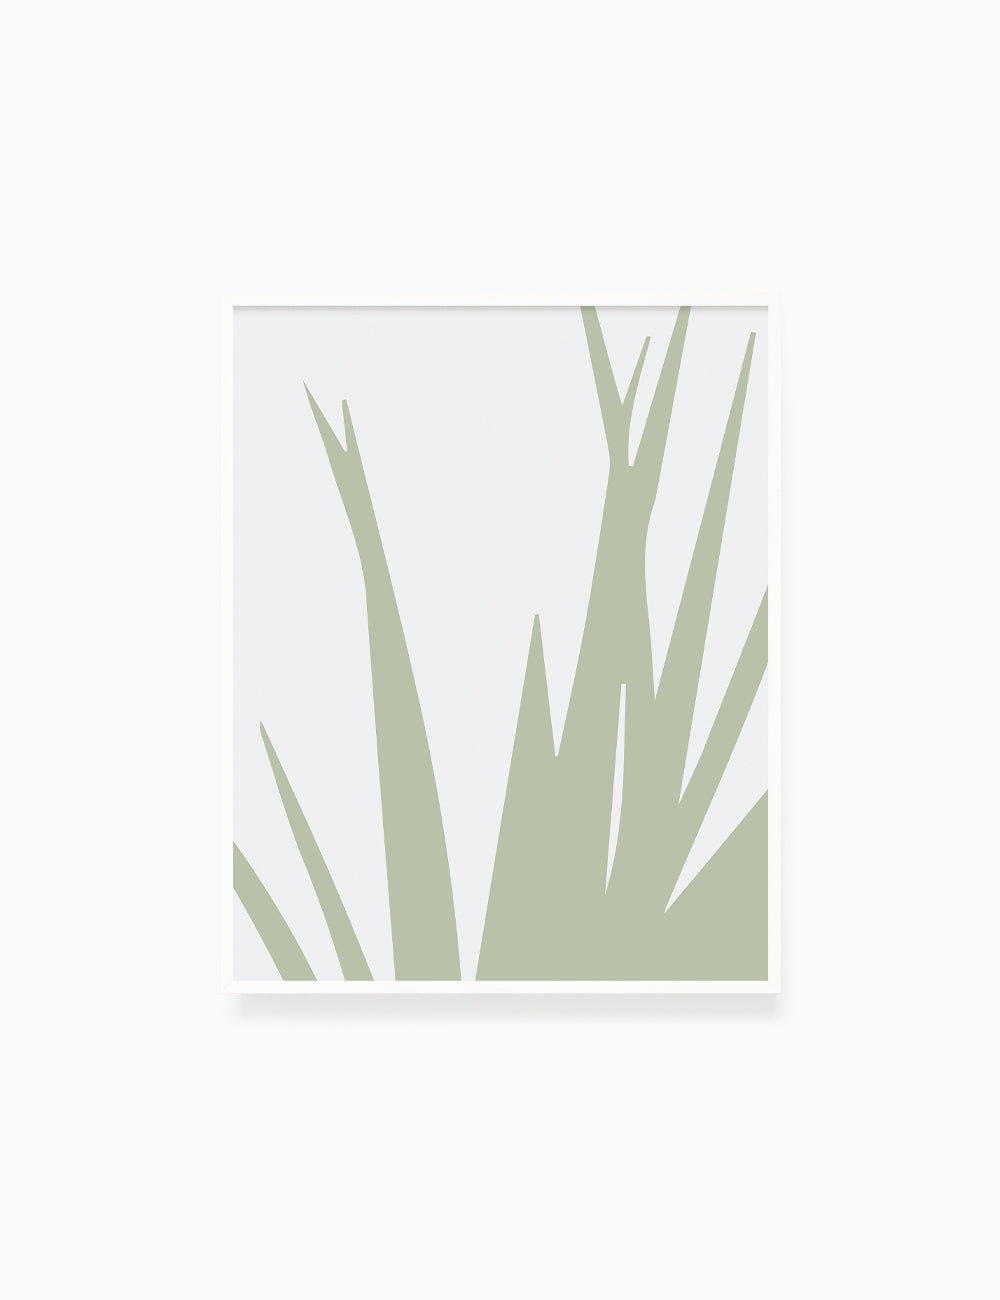 LEAVES. GRASS. MINIMALIST BOTANICAL BOHO ART. GREEN AND BEIGE. Minimal Aesthetic. Clean Design. Printable Wall Art Illustration. - PAPER MOON Art & Design